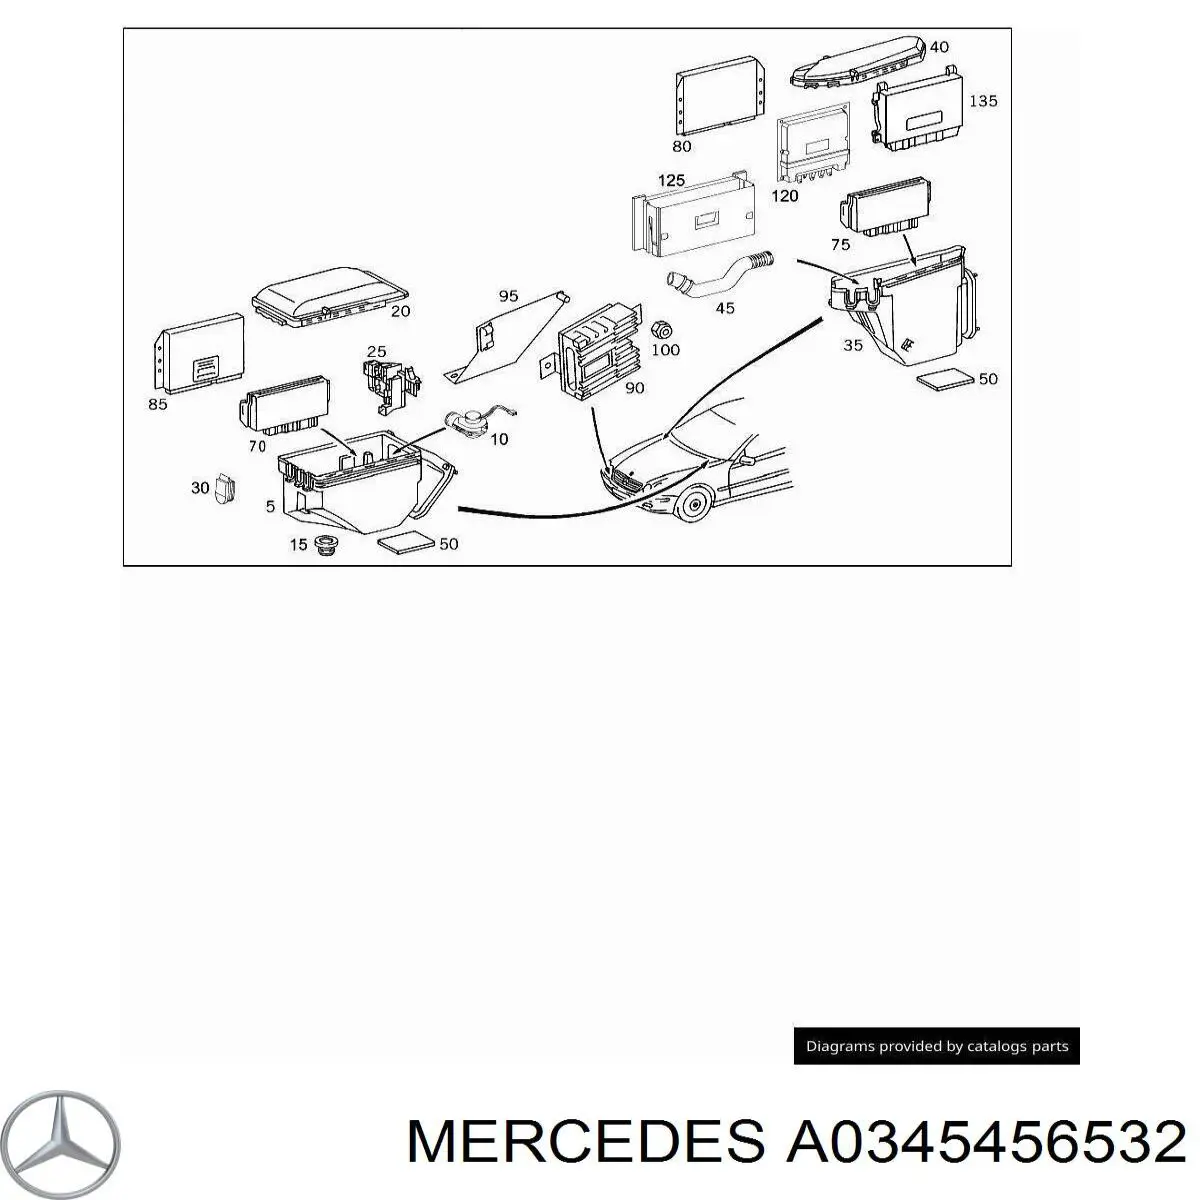 A0345456532 Mercedes блок управления сигналами sam